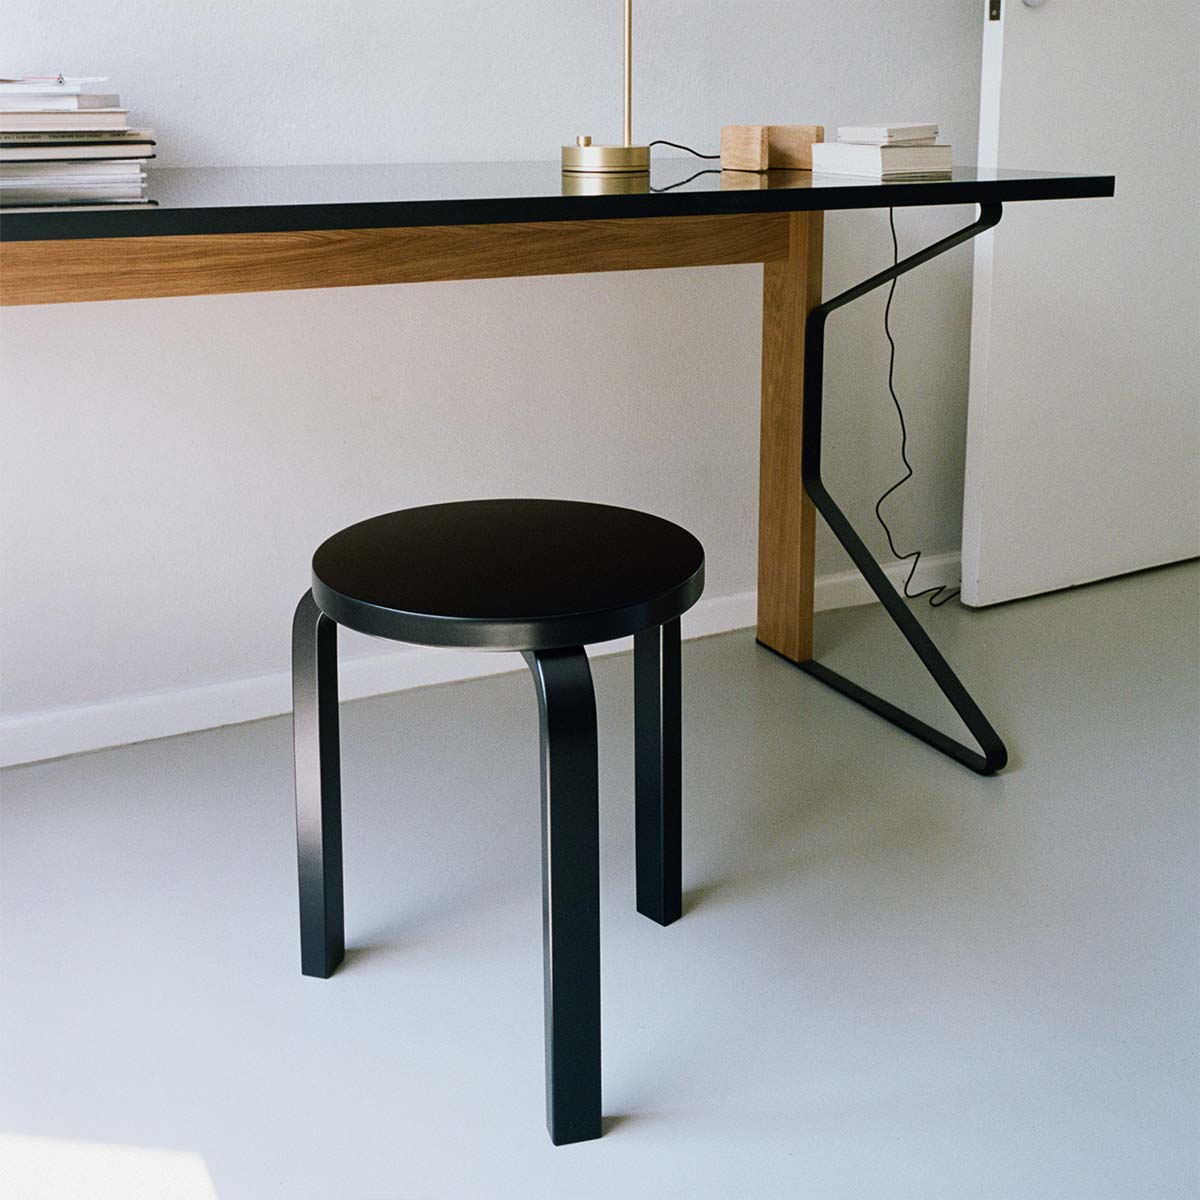 product-color-Seduta Nera/Gambe Nere, Black Seat/Black Legs